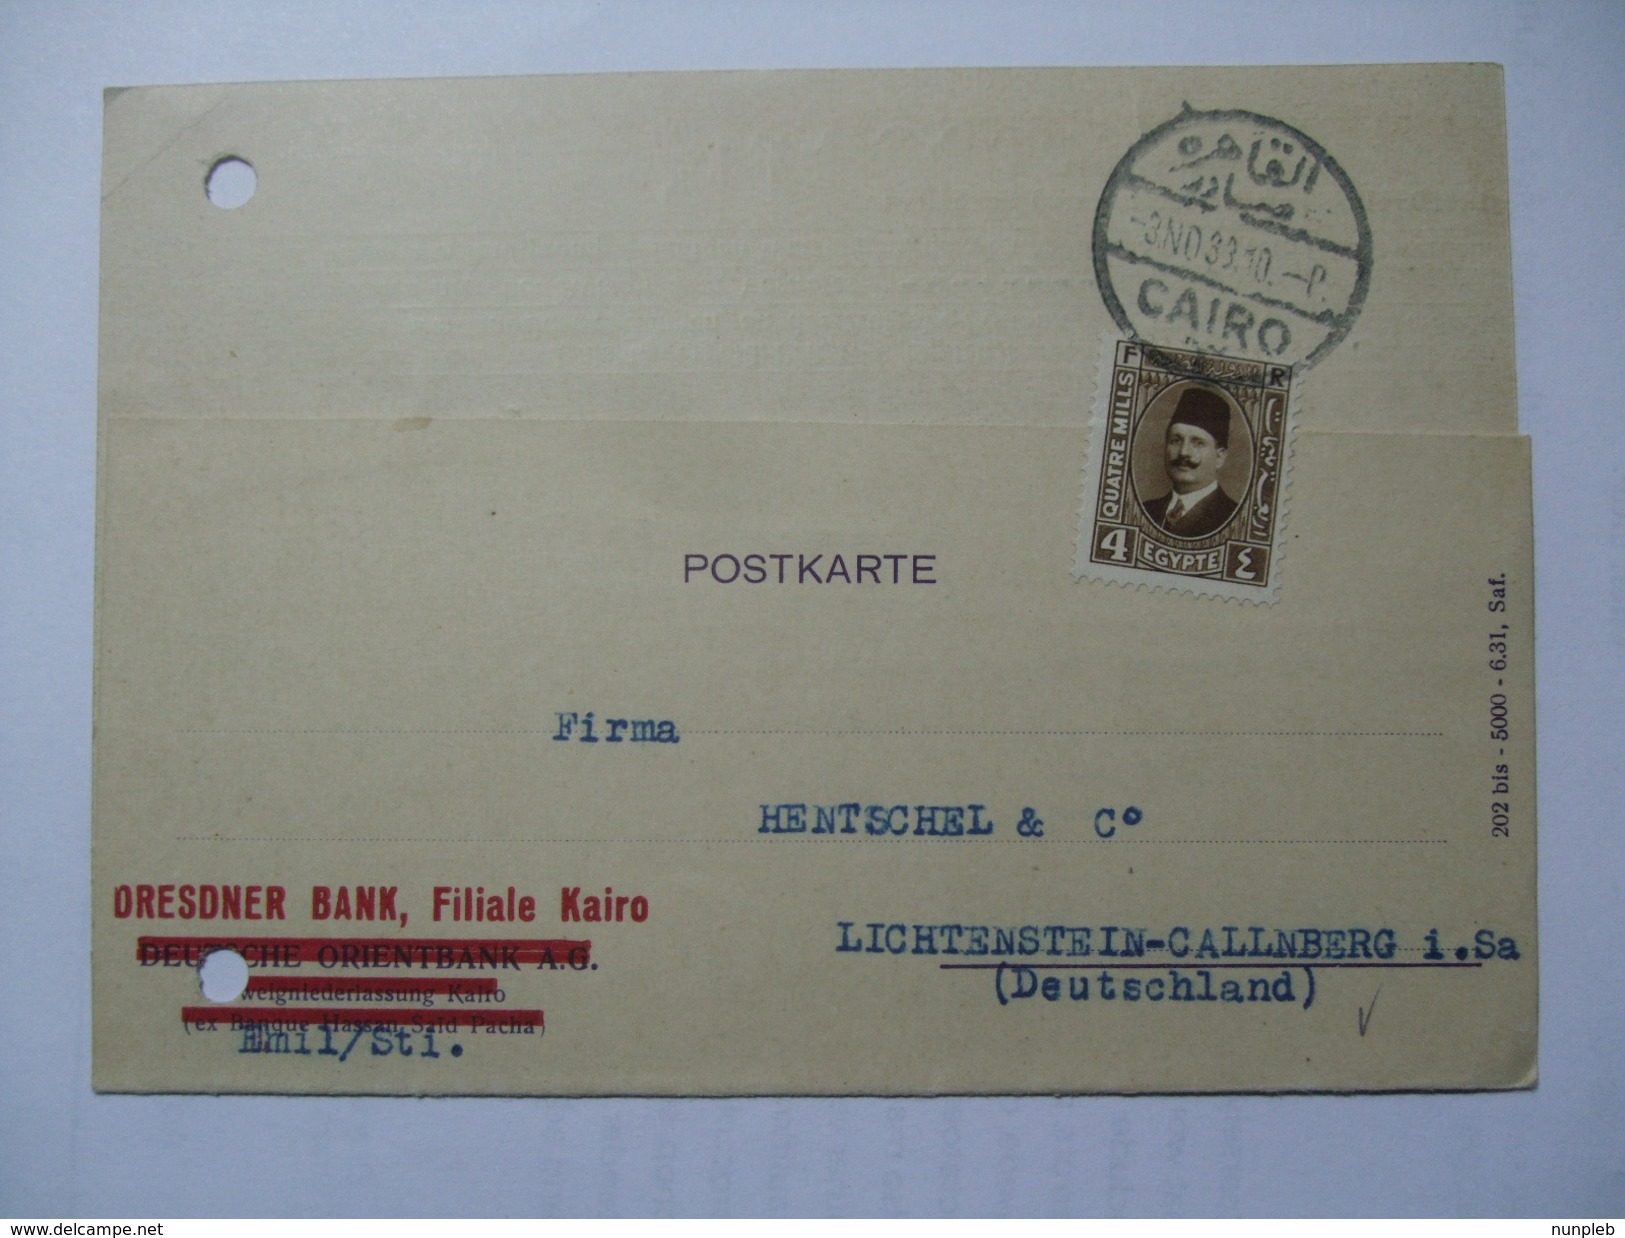 EGYPT - 1933 Postcard Cairo To Lichtenstein Callnberg - Covers & Documents